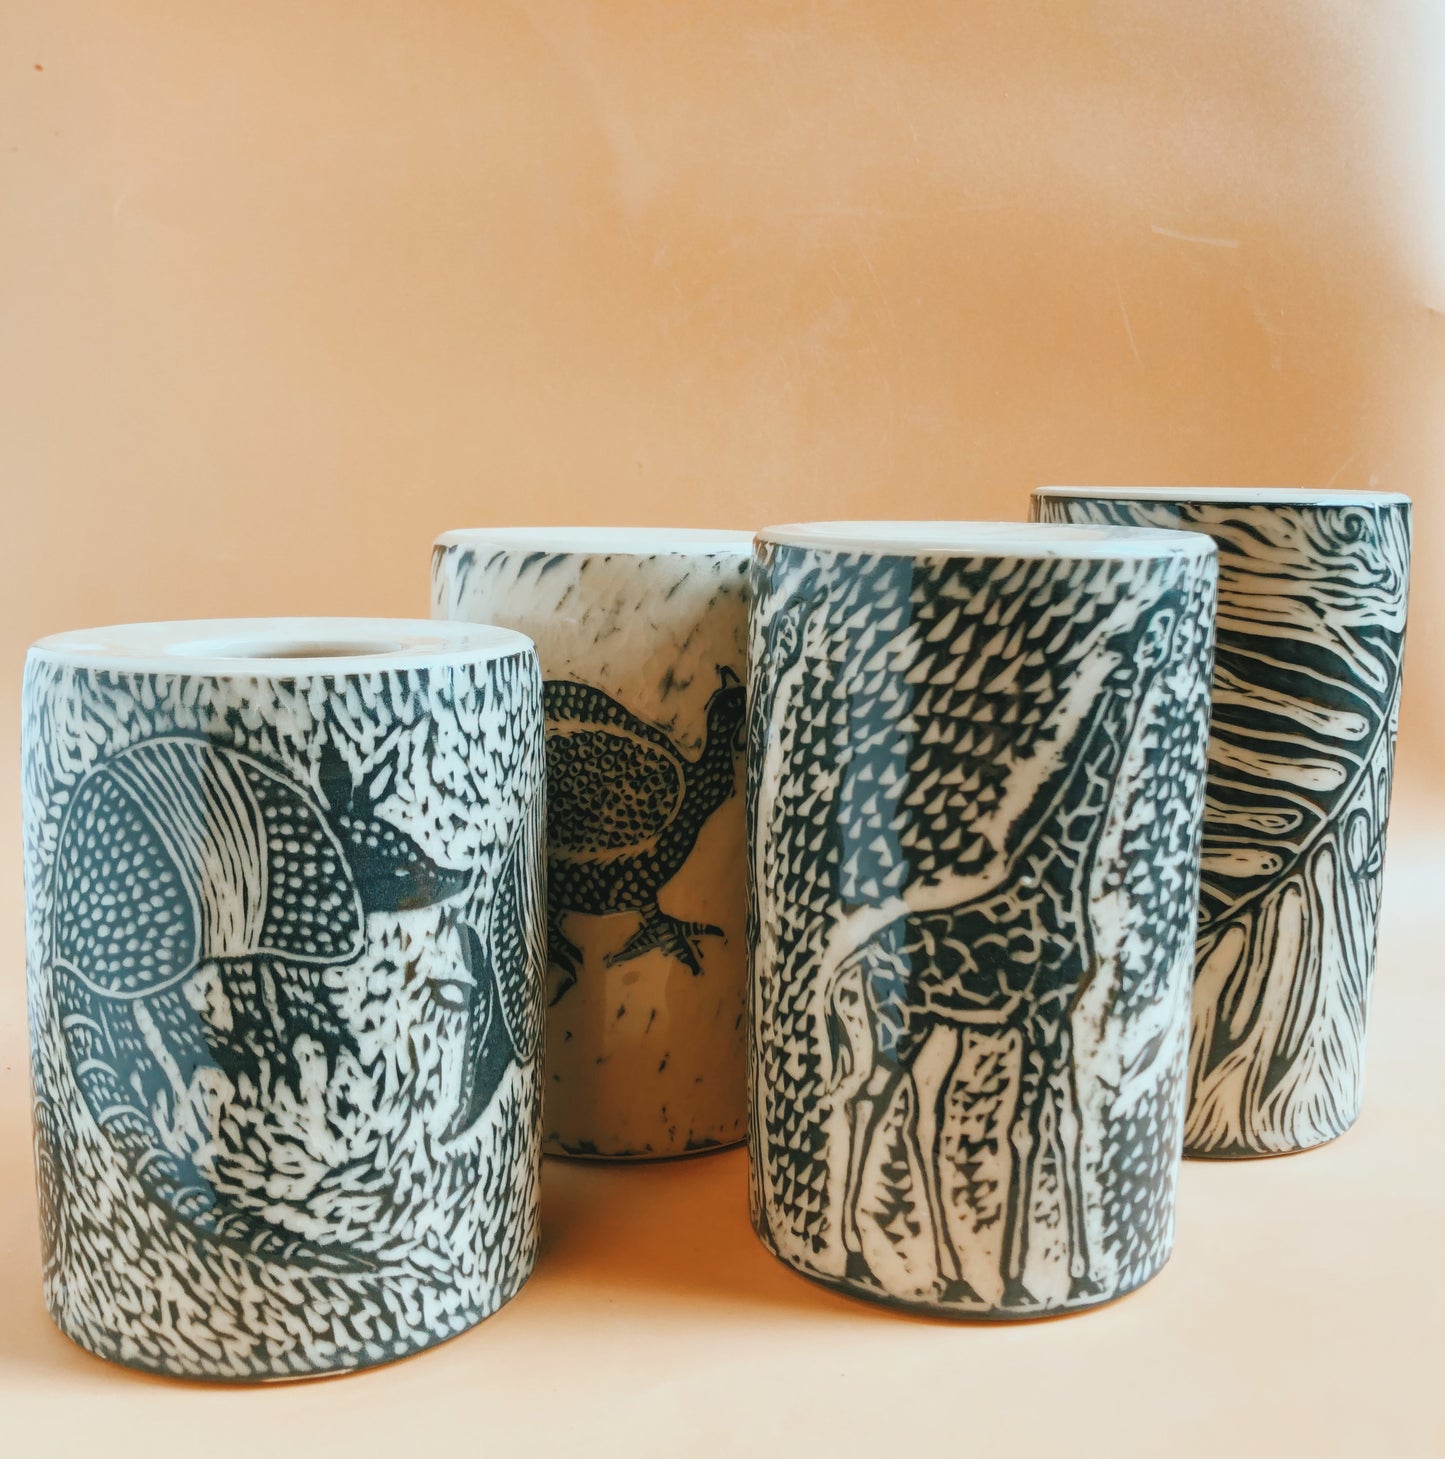 Elena Sheppa designed Vases